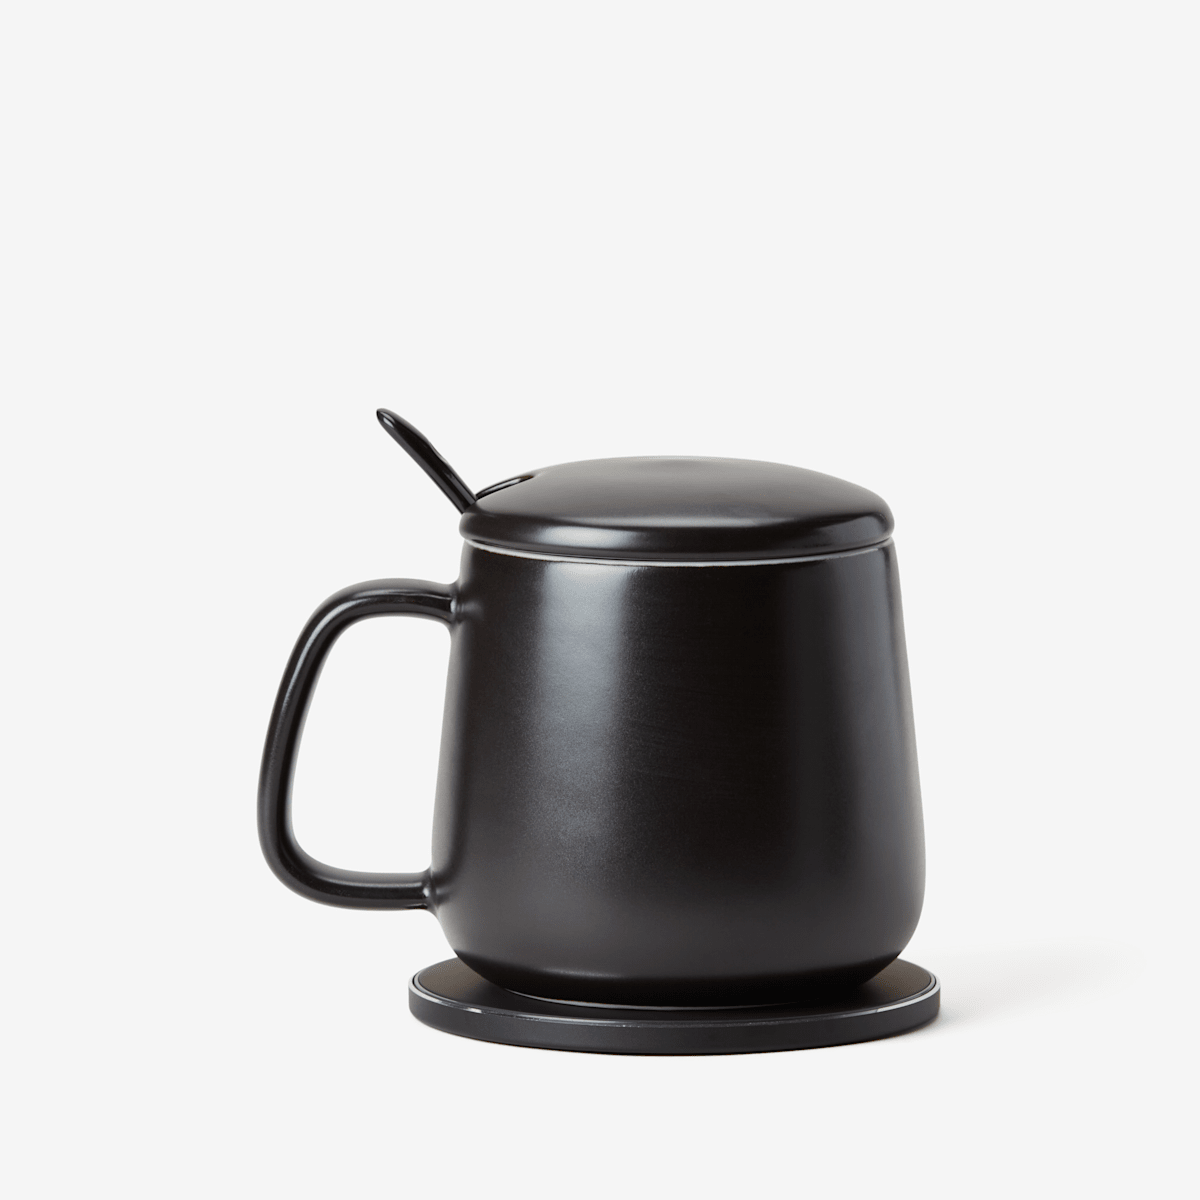 USB Cup Warmer Hot Tea Makers Electronic Gift Coffee Mug Warmer